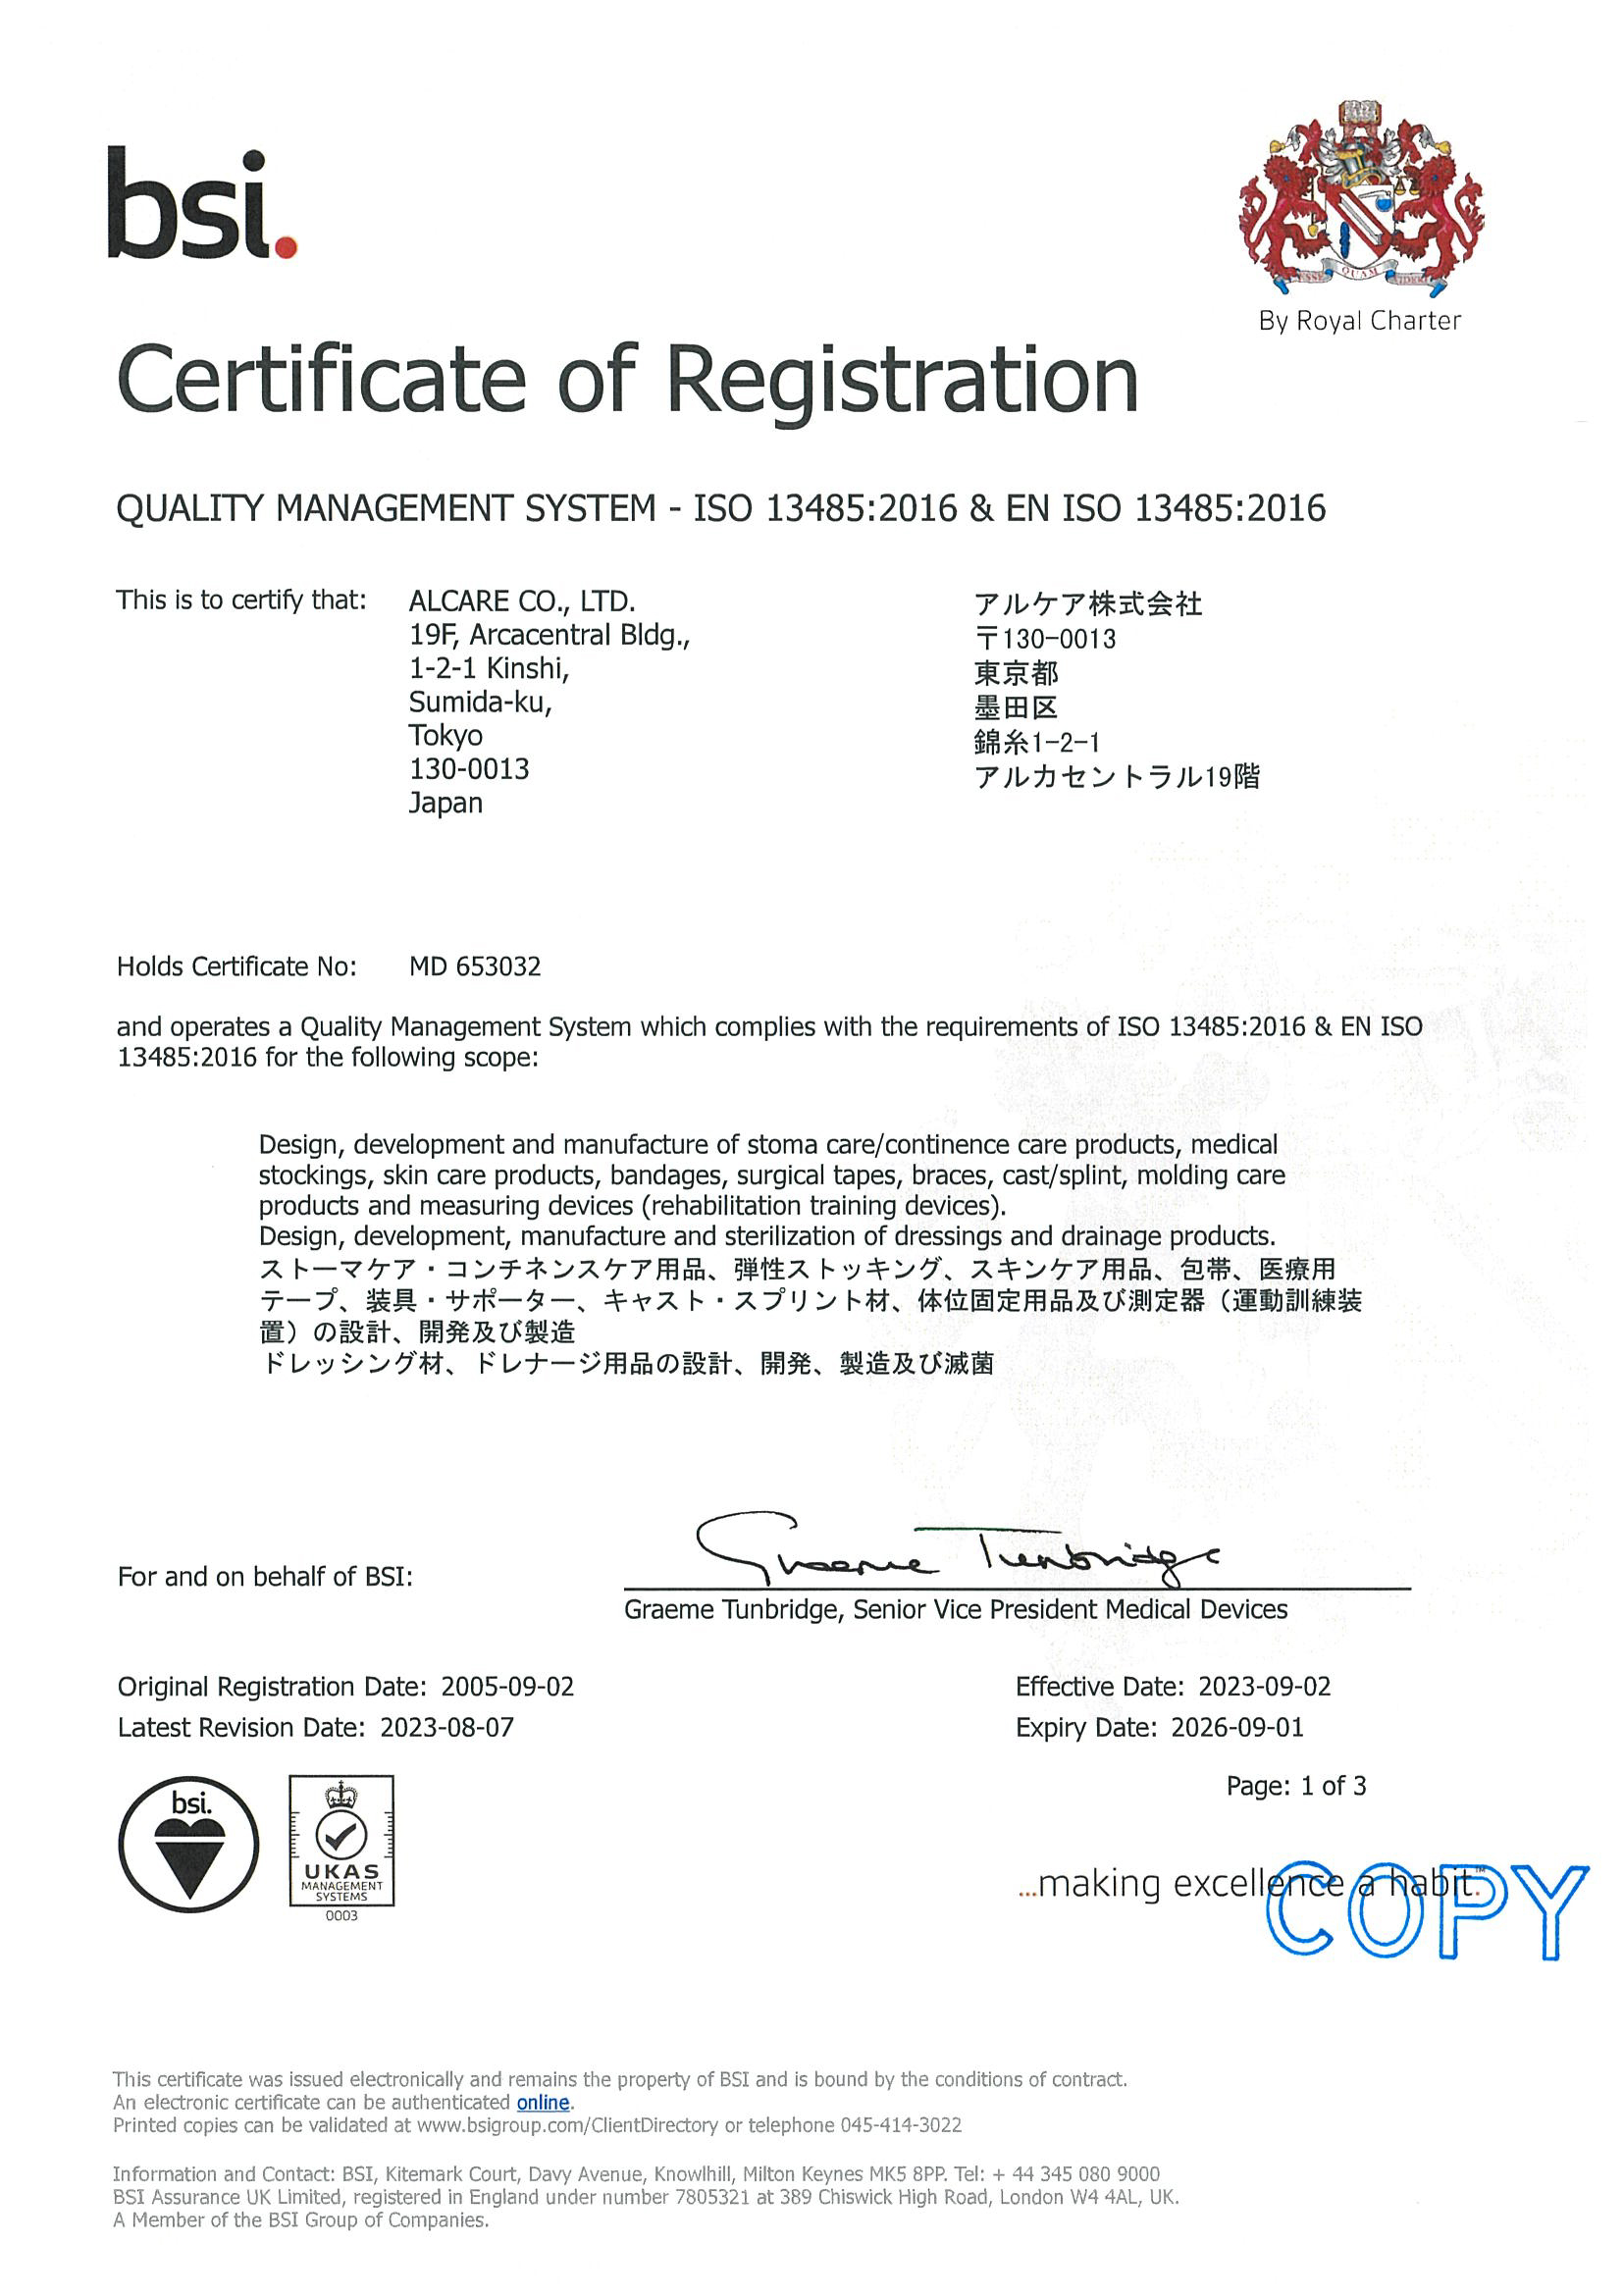 ISO 13485 认证